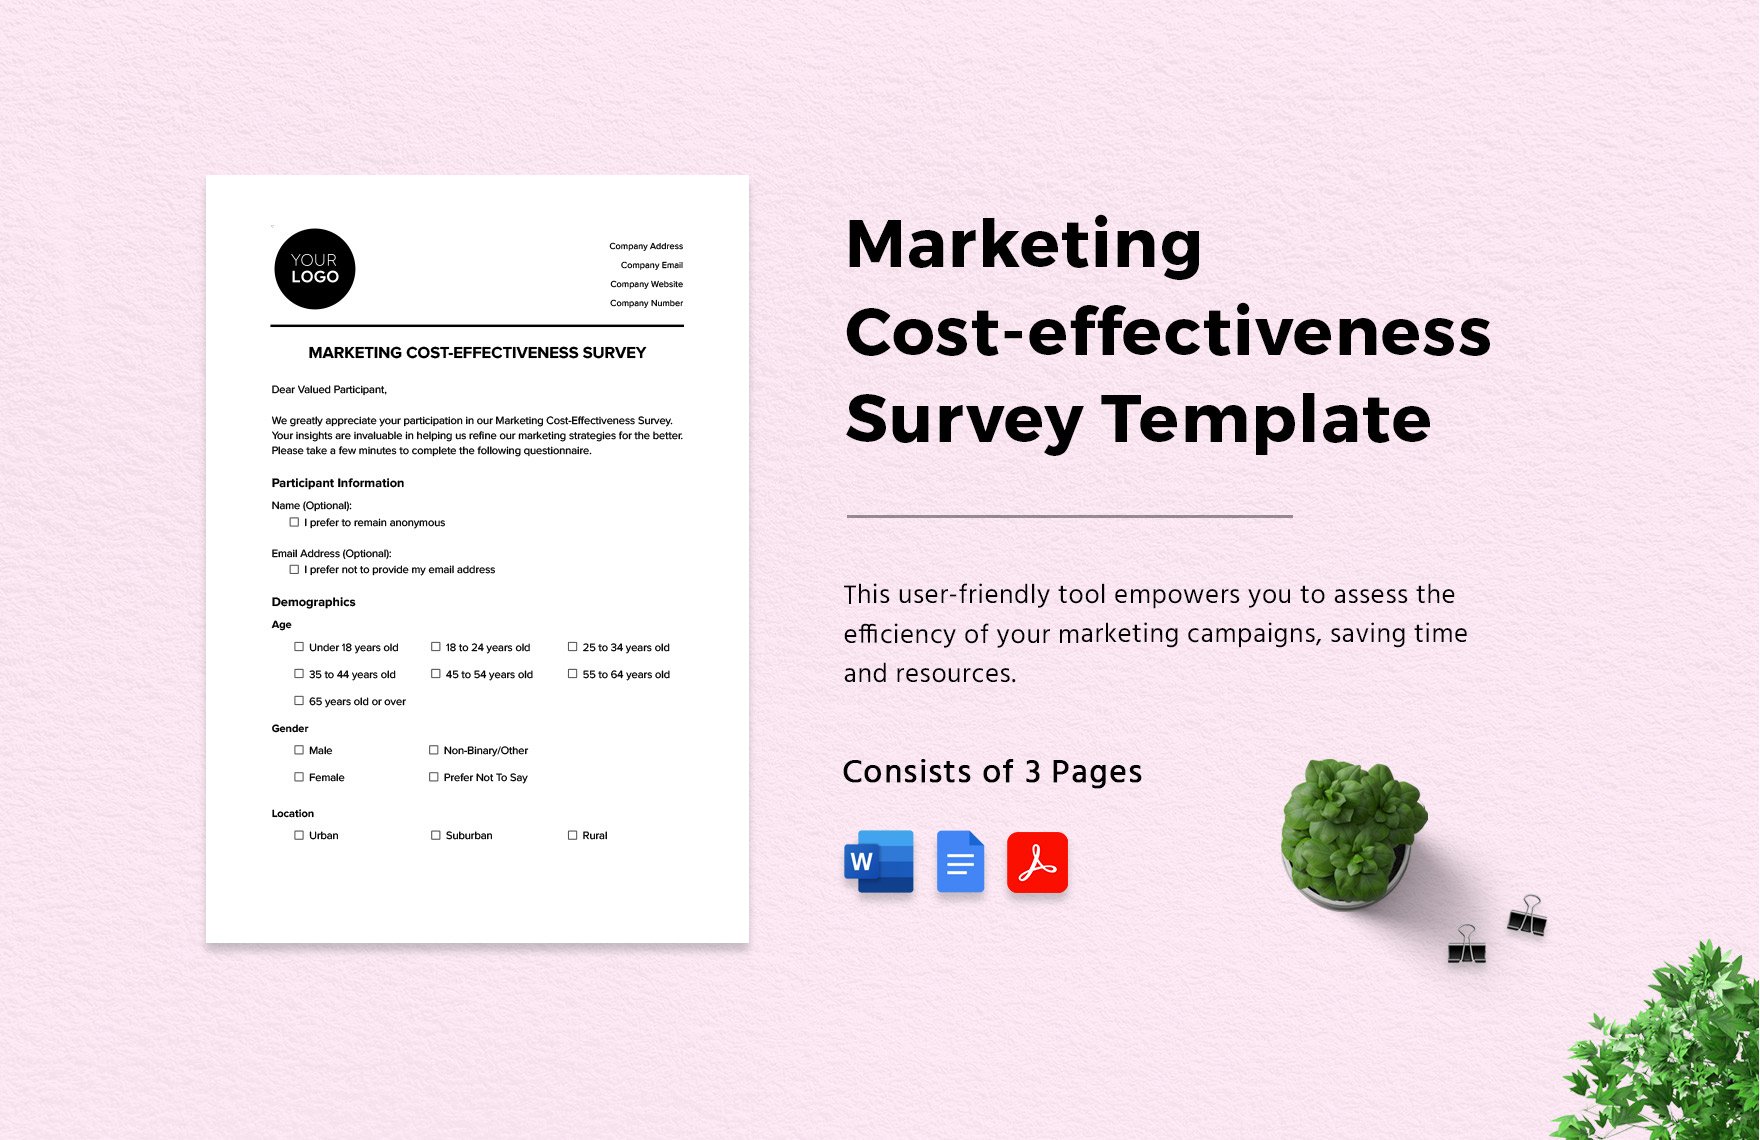 Marketing Cost-effectiveness Survey Template